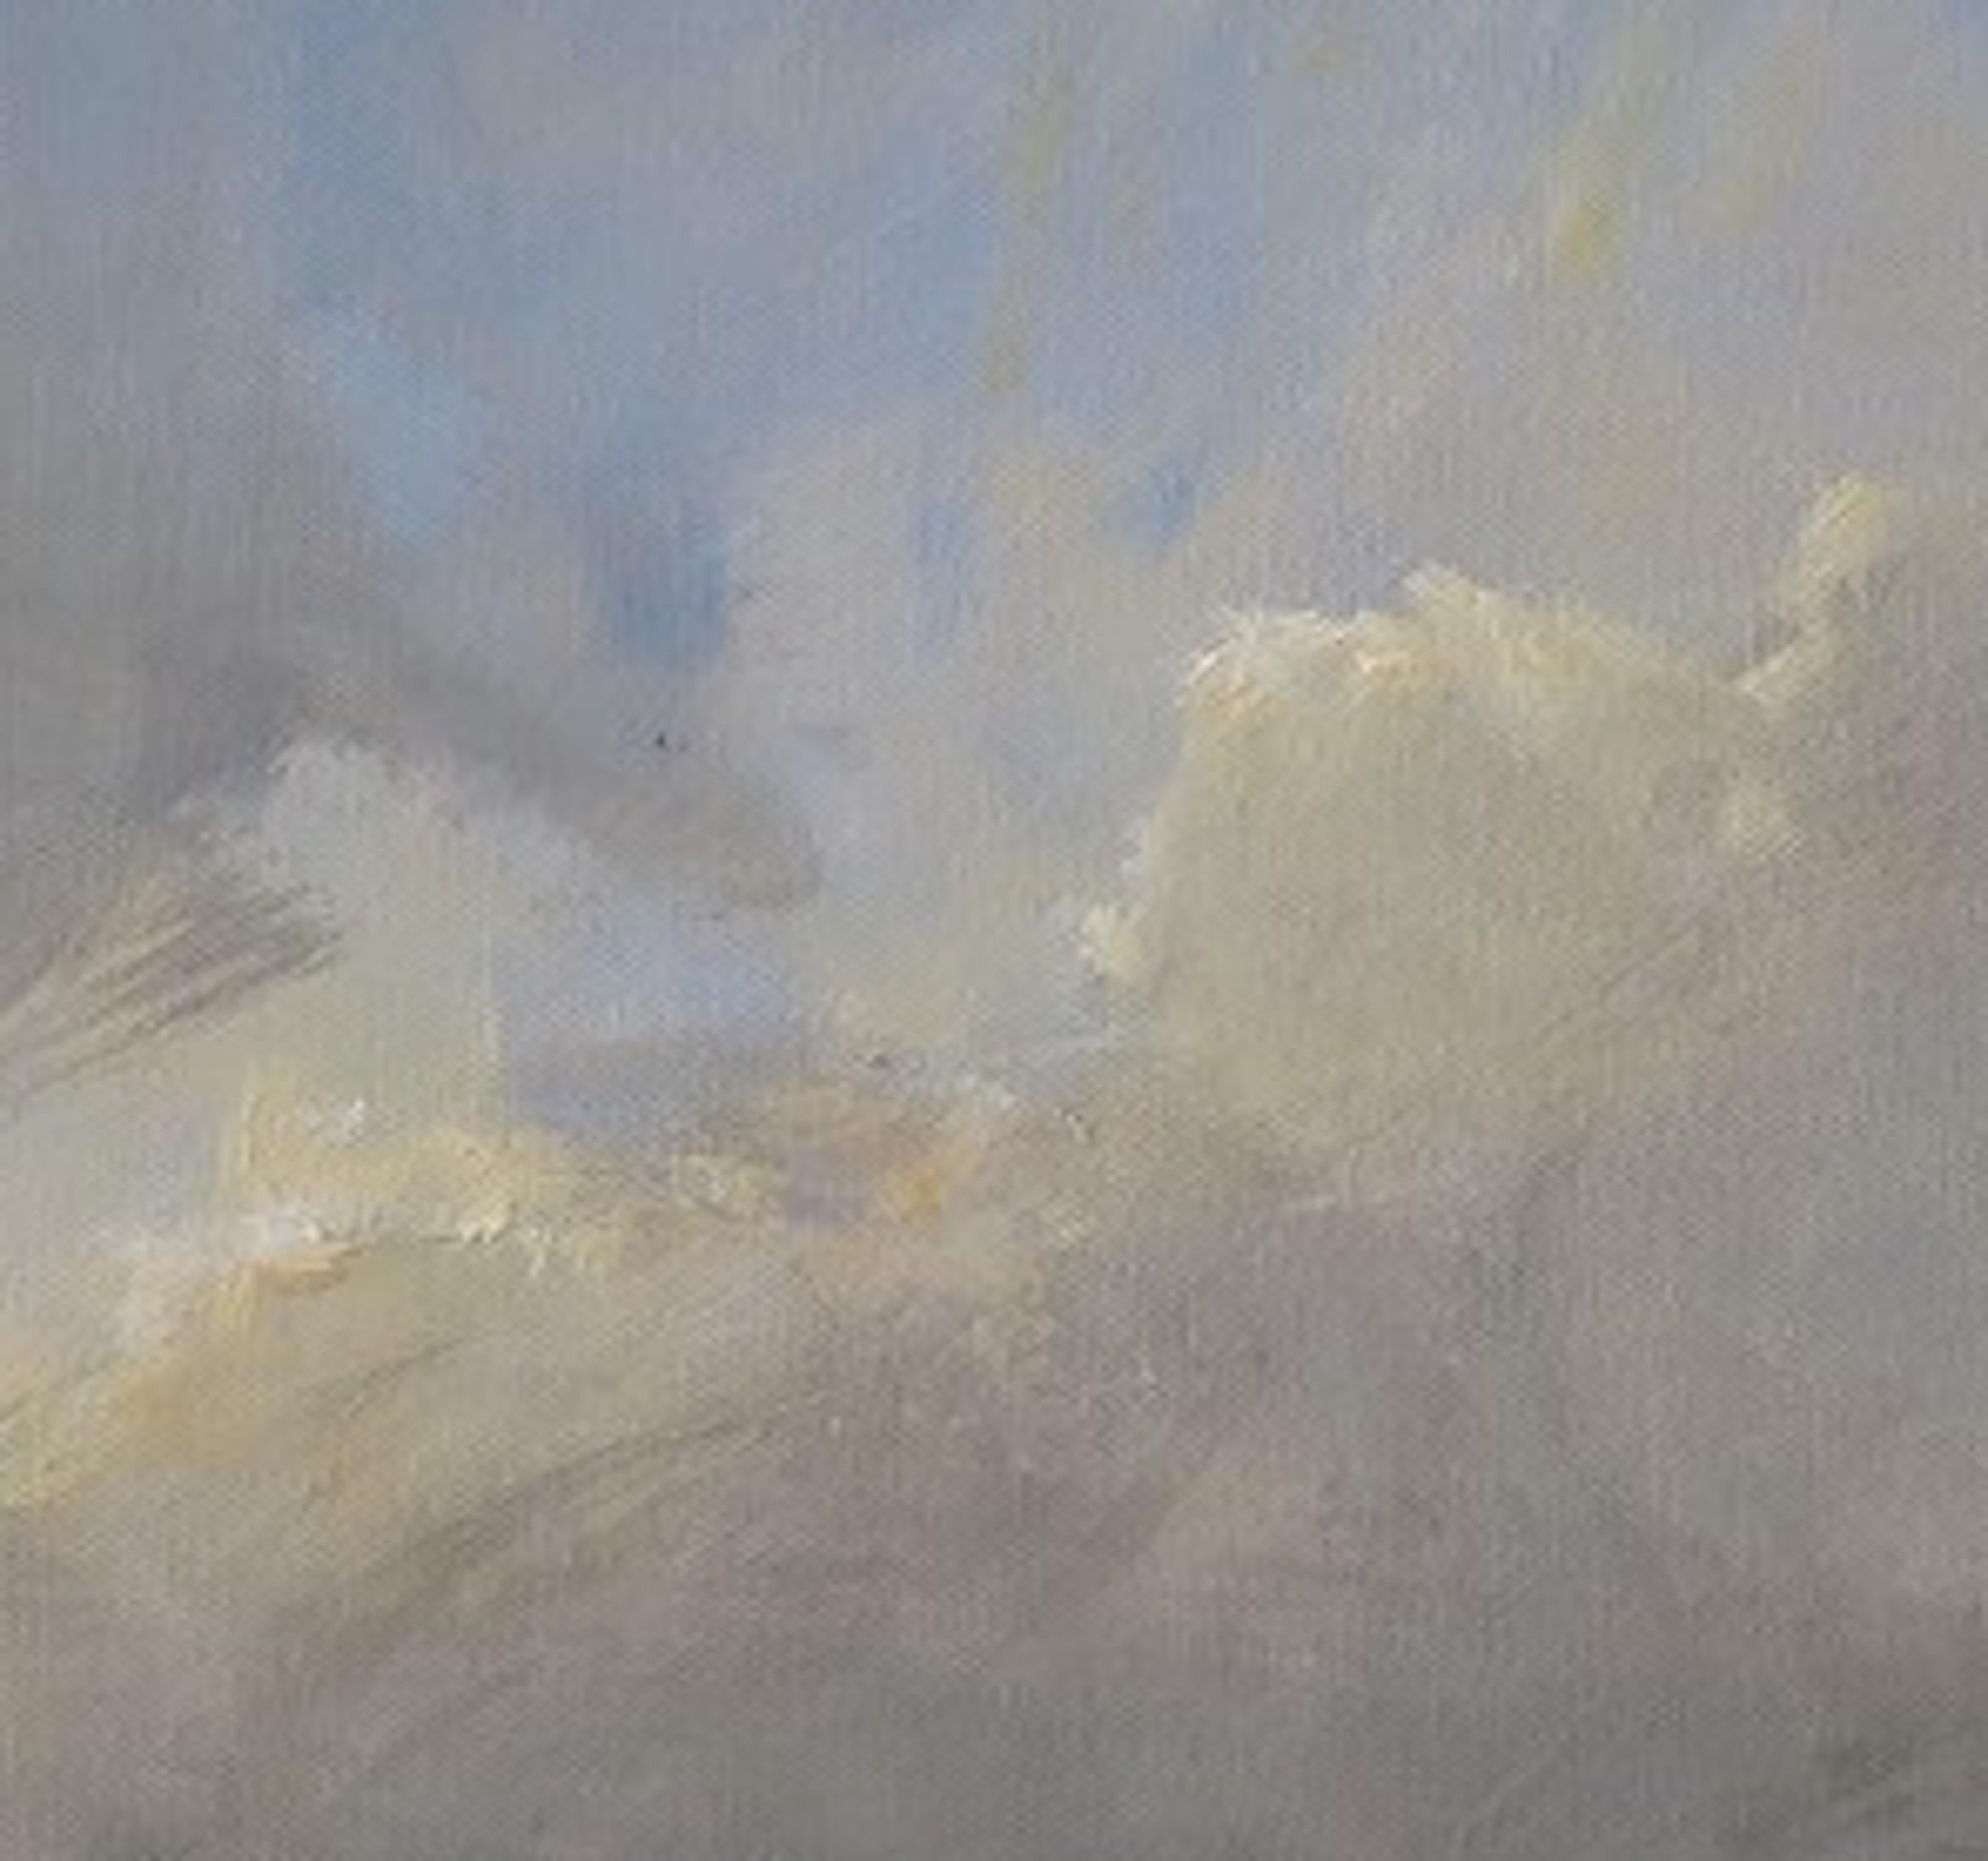 Wolds, July 12, landscape art, affordable art, cloud art, plein air art - Realist Painting by Malcolm Ludvigsen